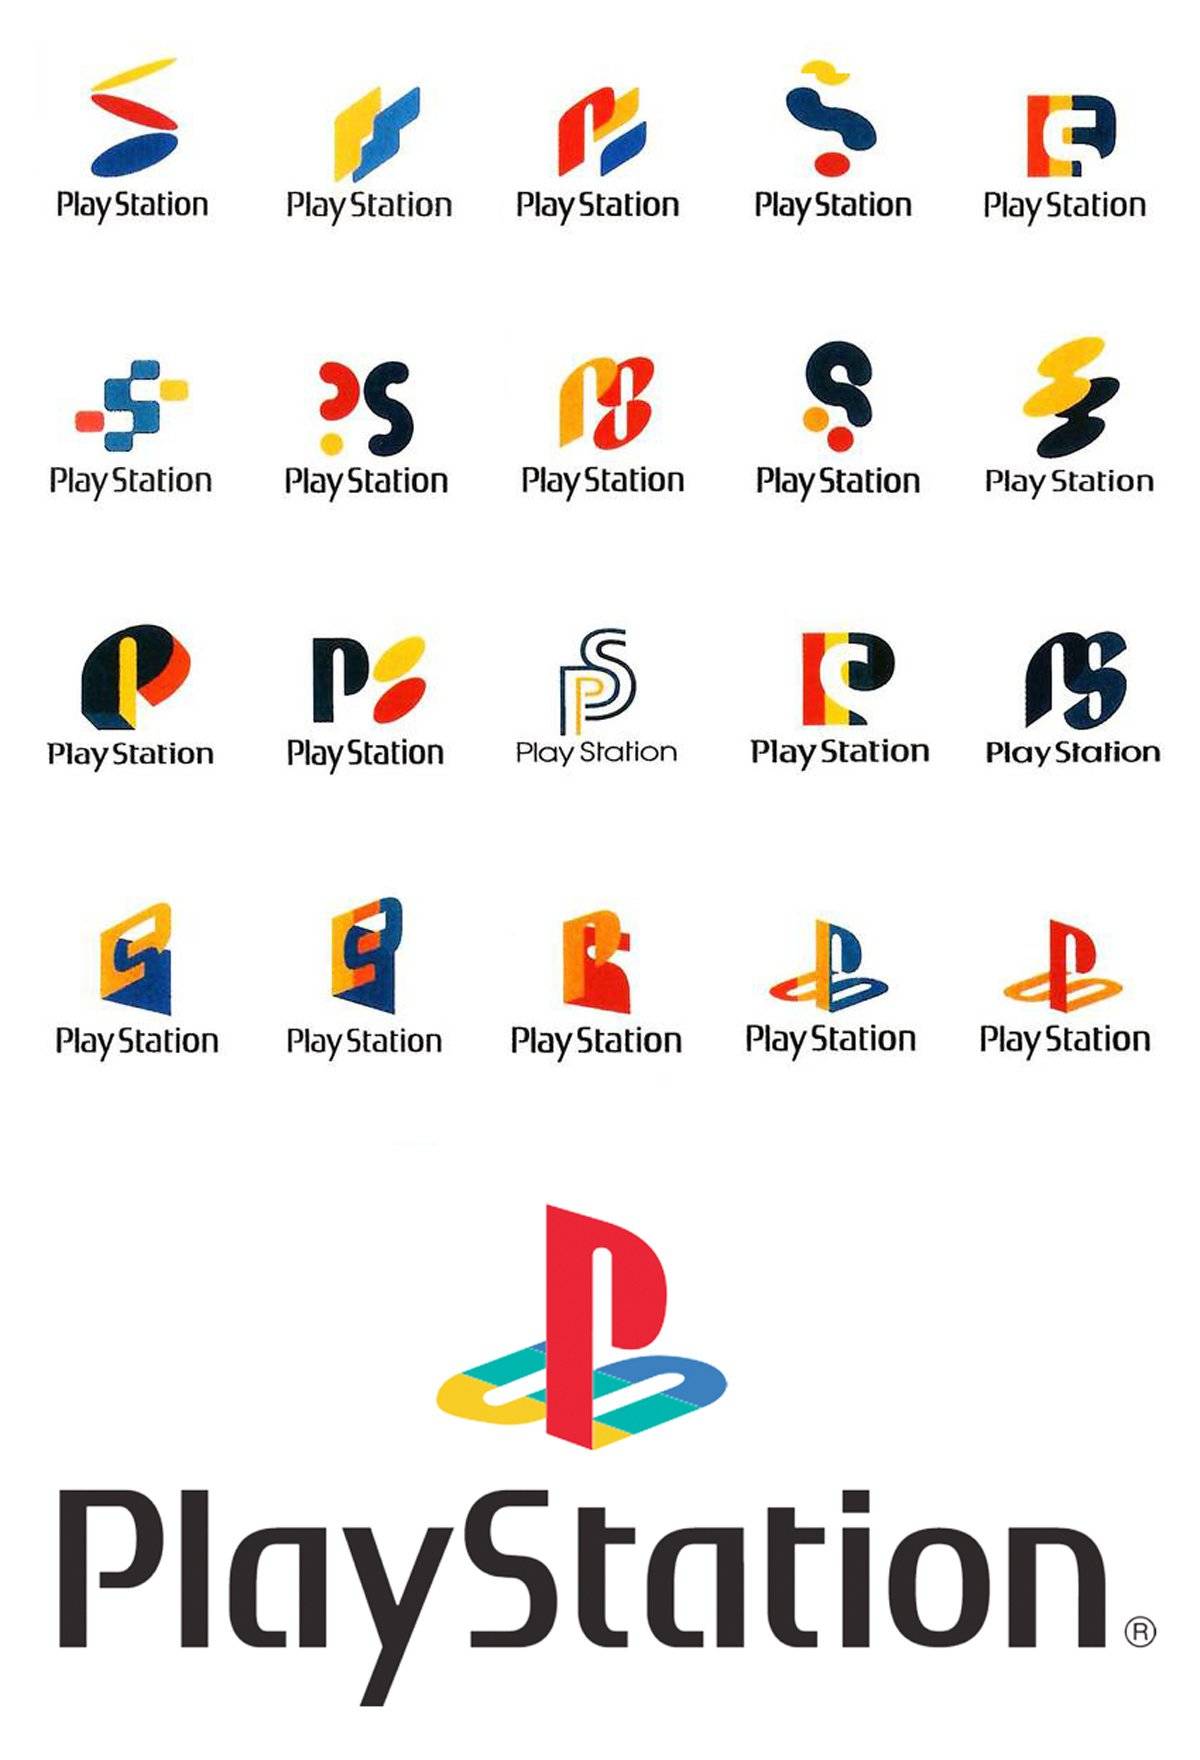 PlayStation Logo - Sony Playstation 1 Logo Design Ideas and Concepts | The Logo Smith